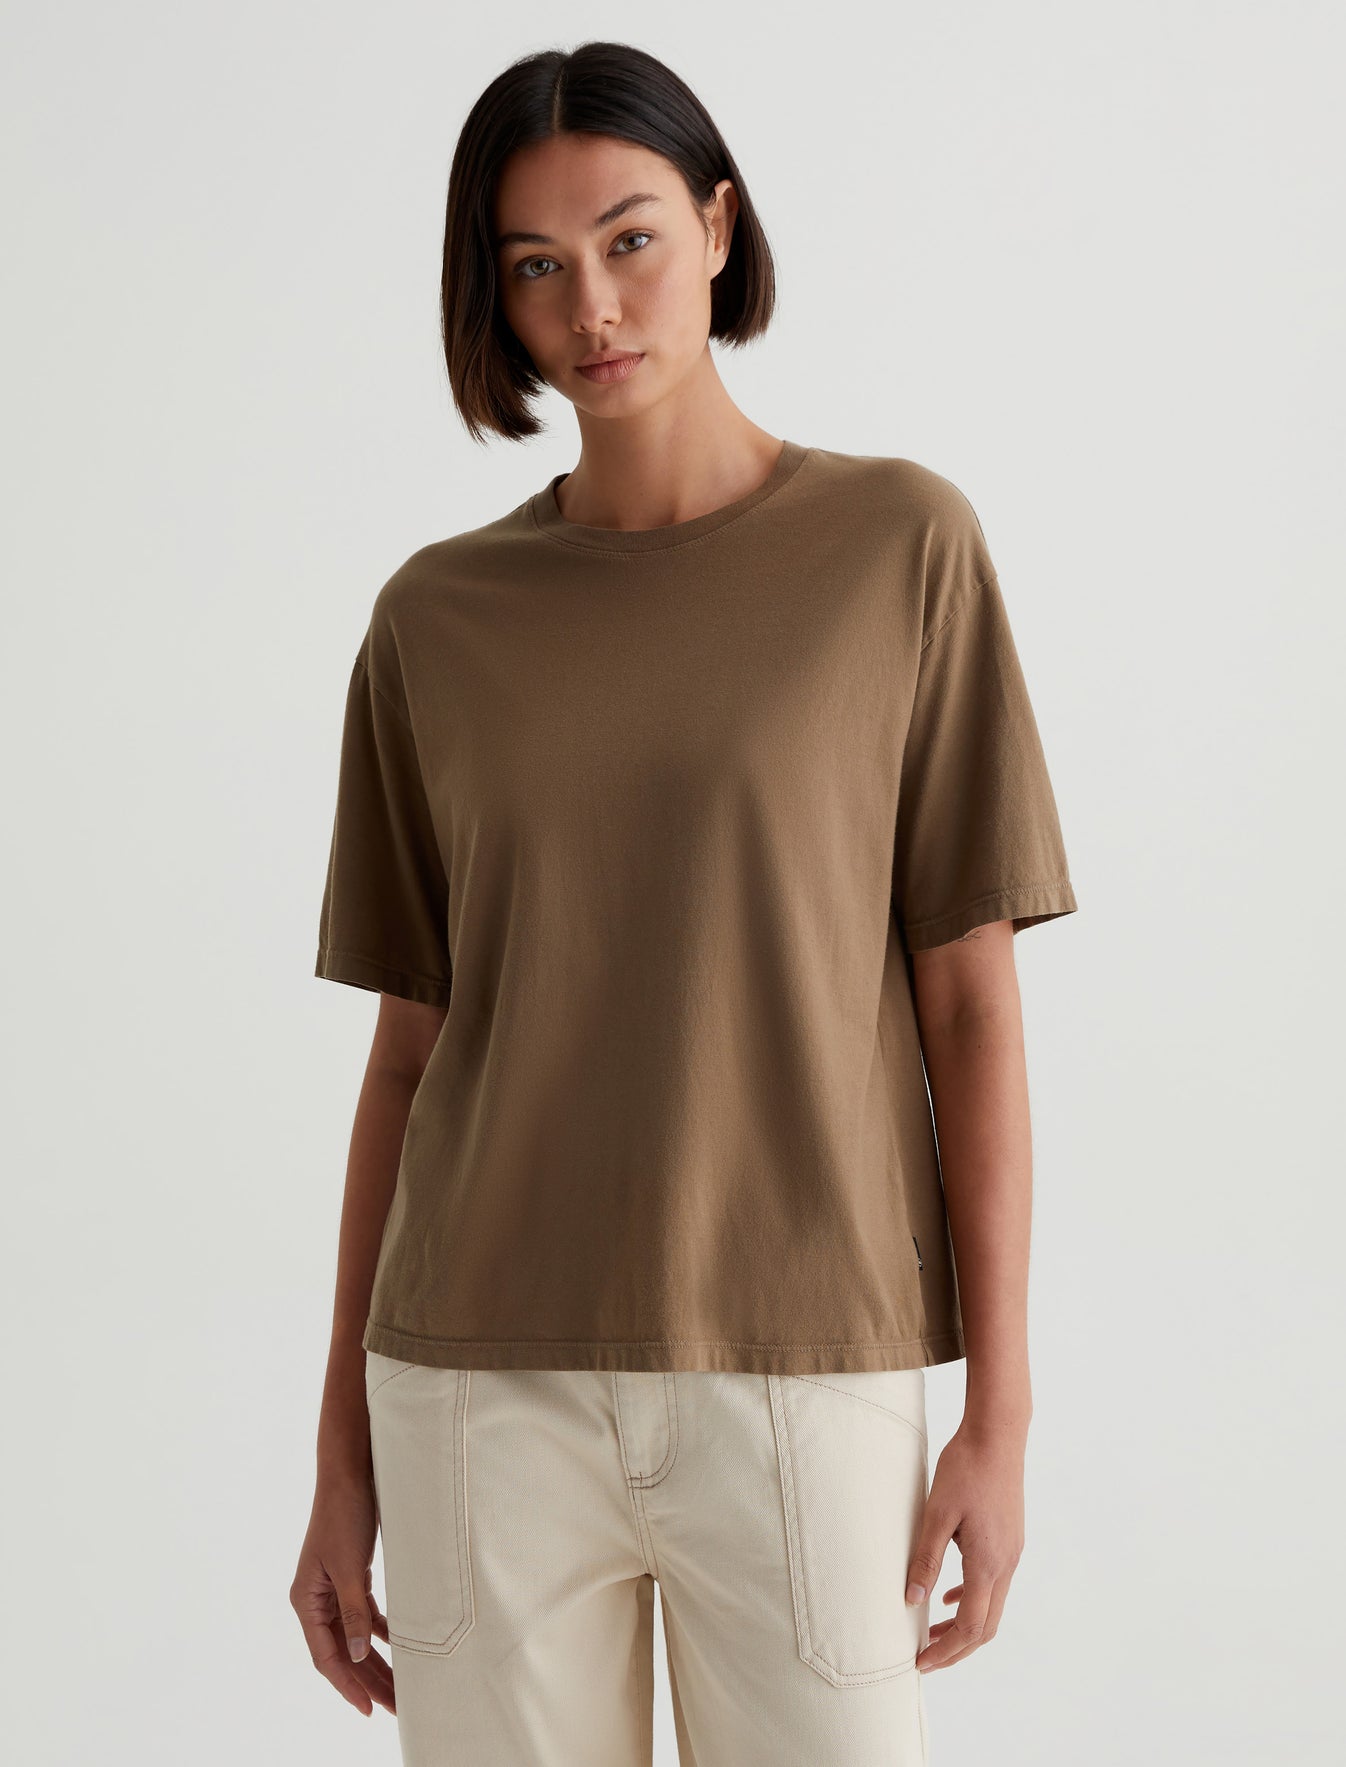 Karter Ex-Boyfriend Wild Mushroom Oversized Fit Short Sleeve Crew Neck T-Shirt Womens Top Photo 1